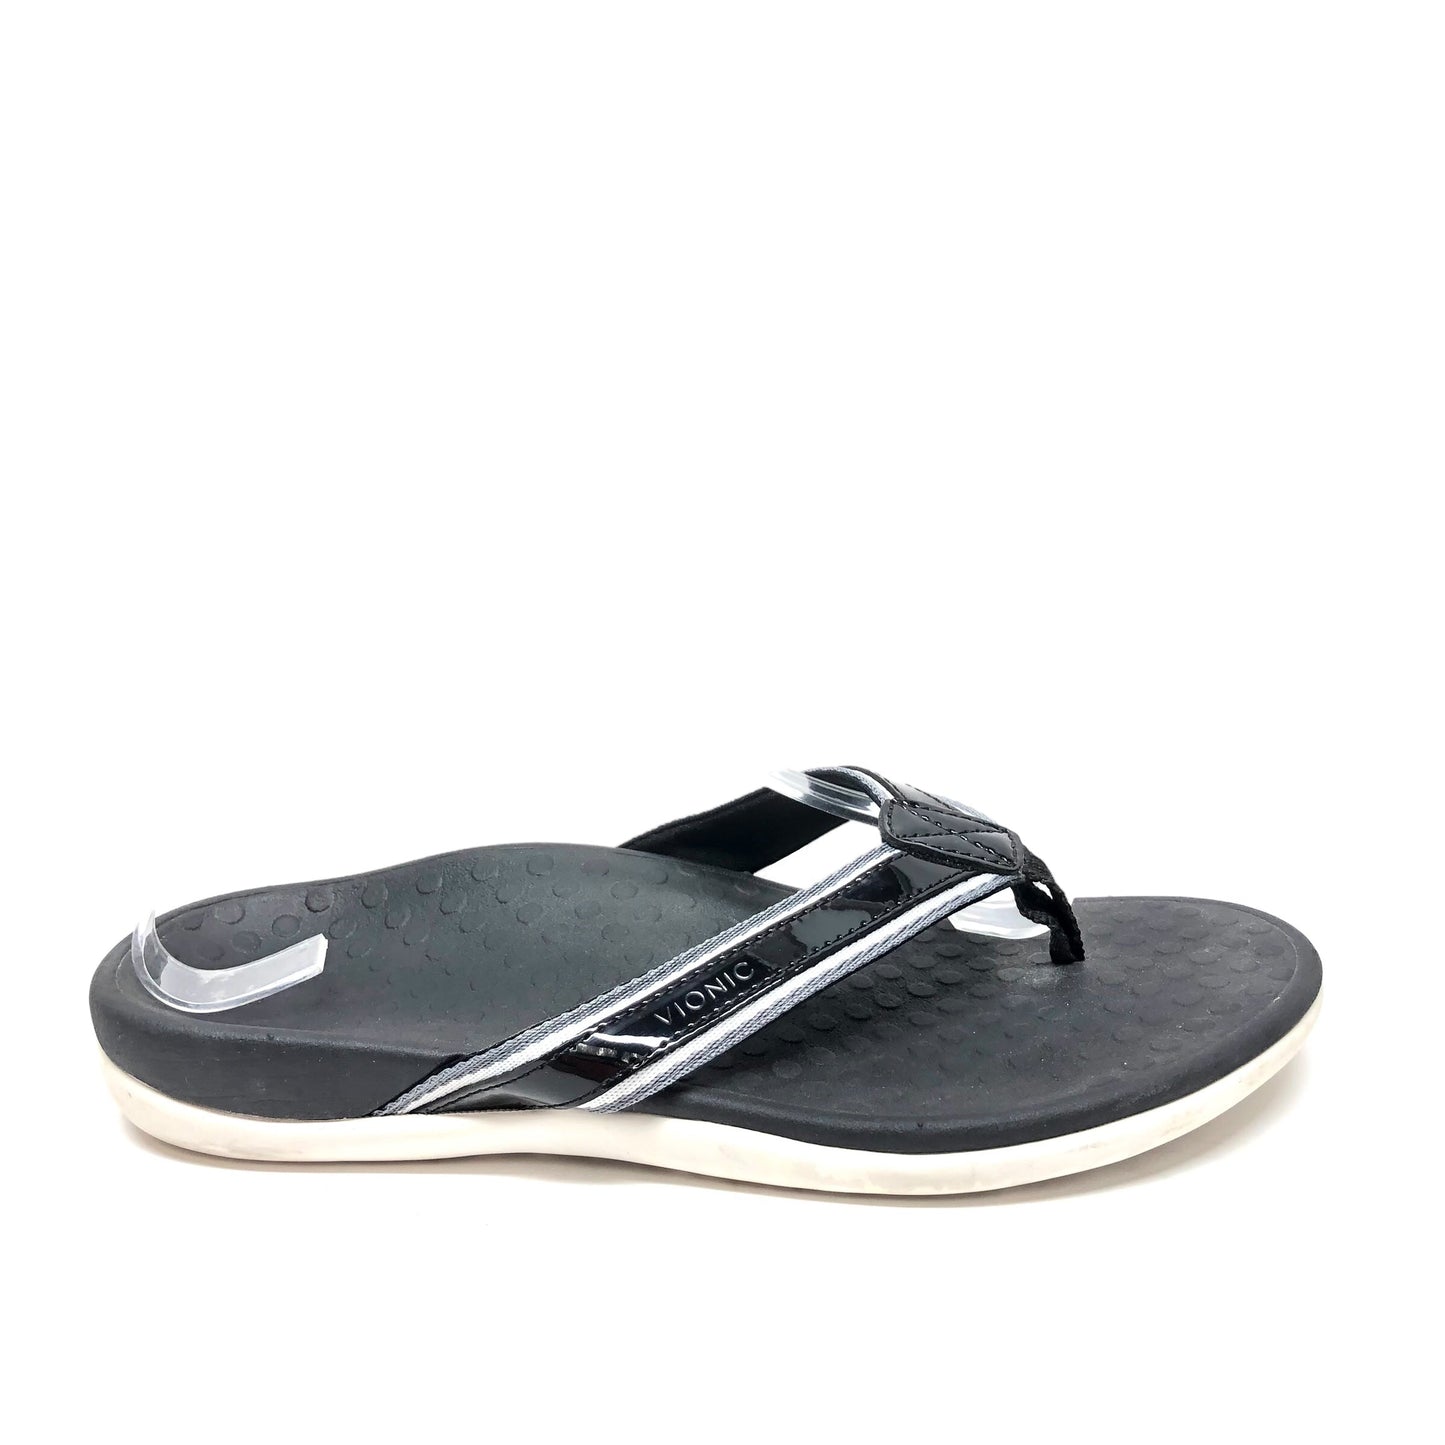 Black & White Sandals Flip Flops Vionic, Size 8